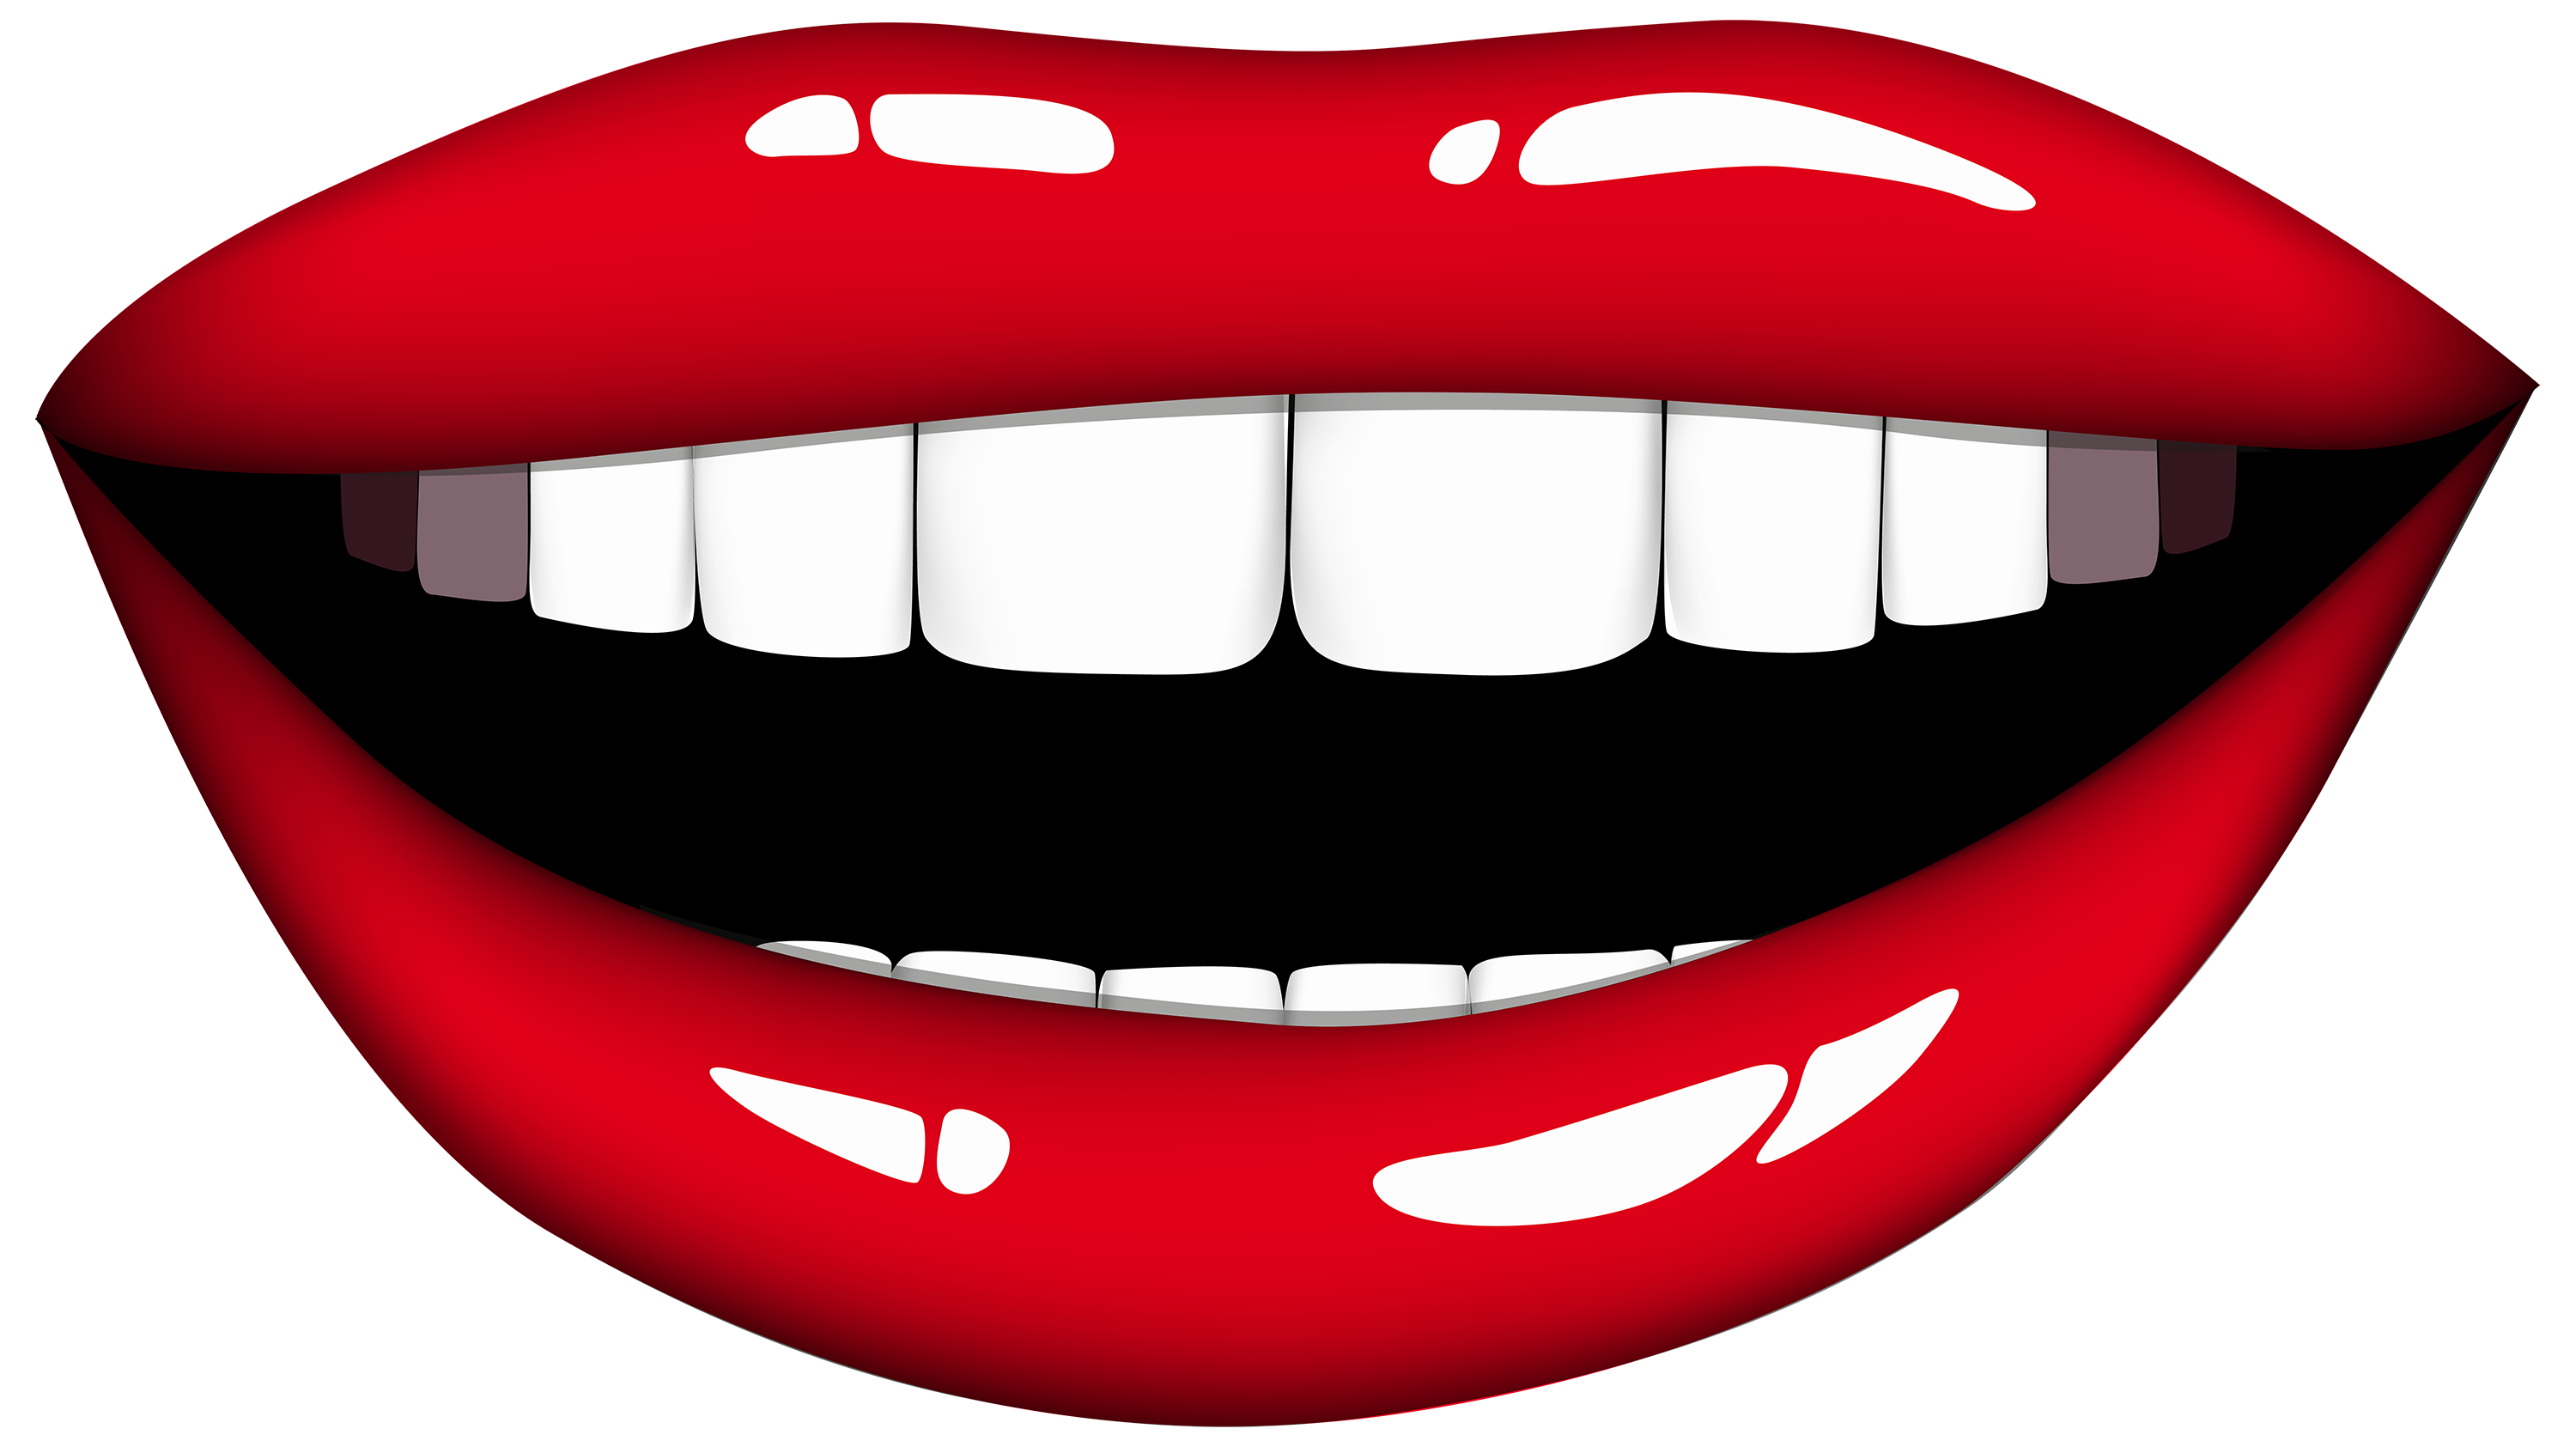 Lips PNG Transparent Image